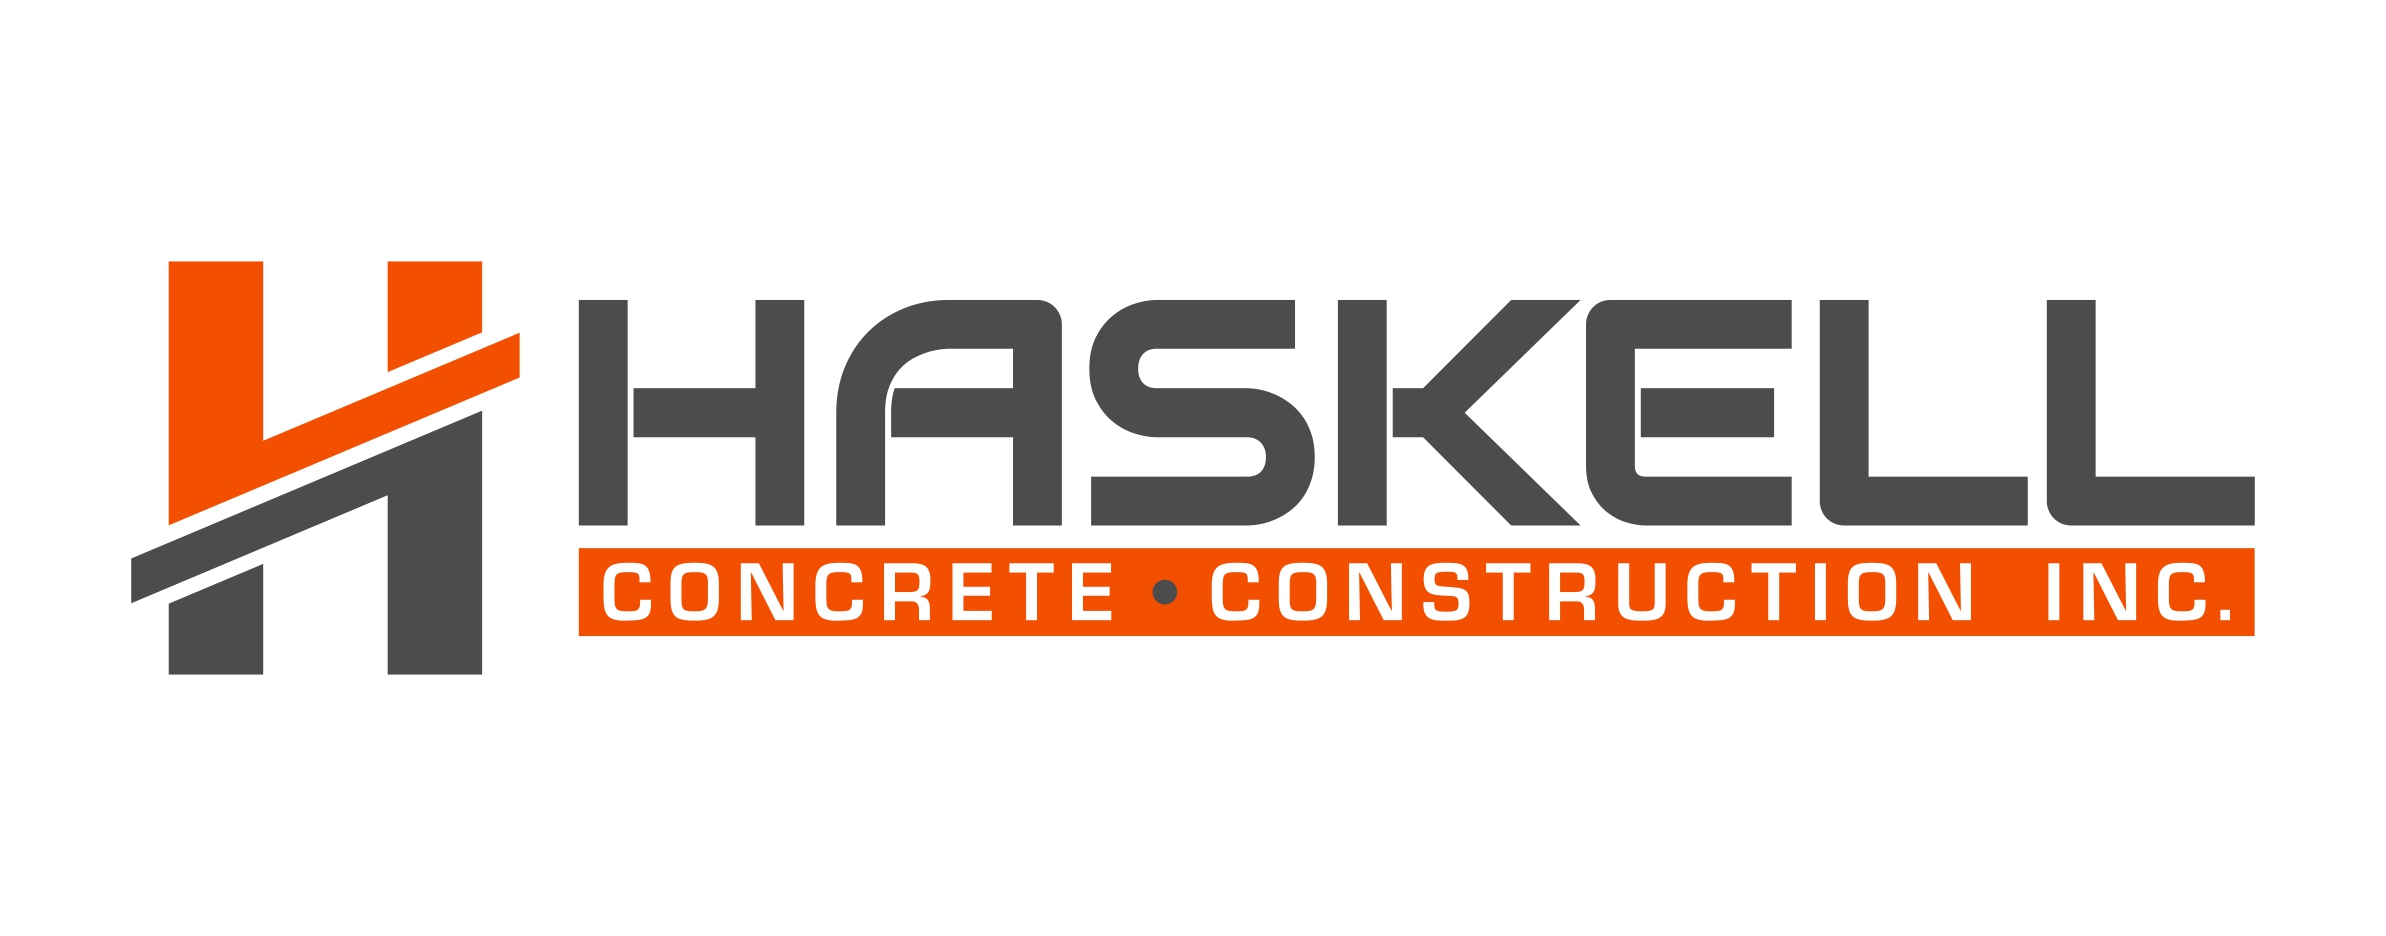 Haskell Concrete Construction Co., Inc. Logo